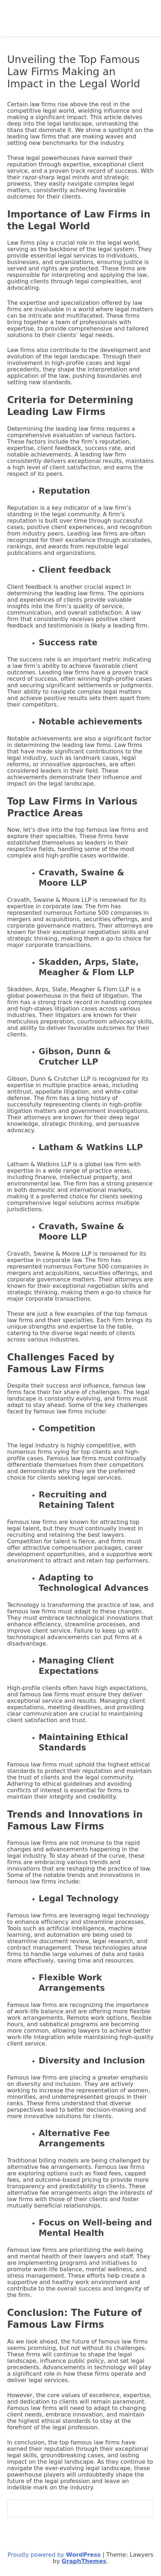 Levine Law, LLC - Newark NJ Lawyers